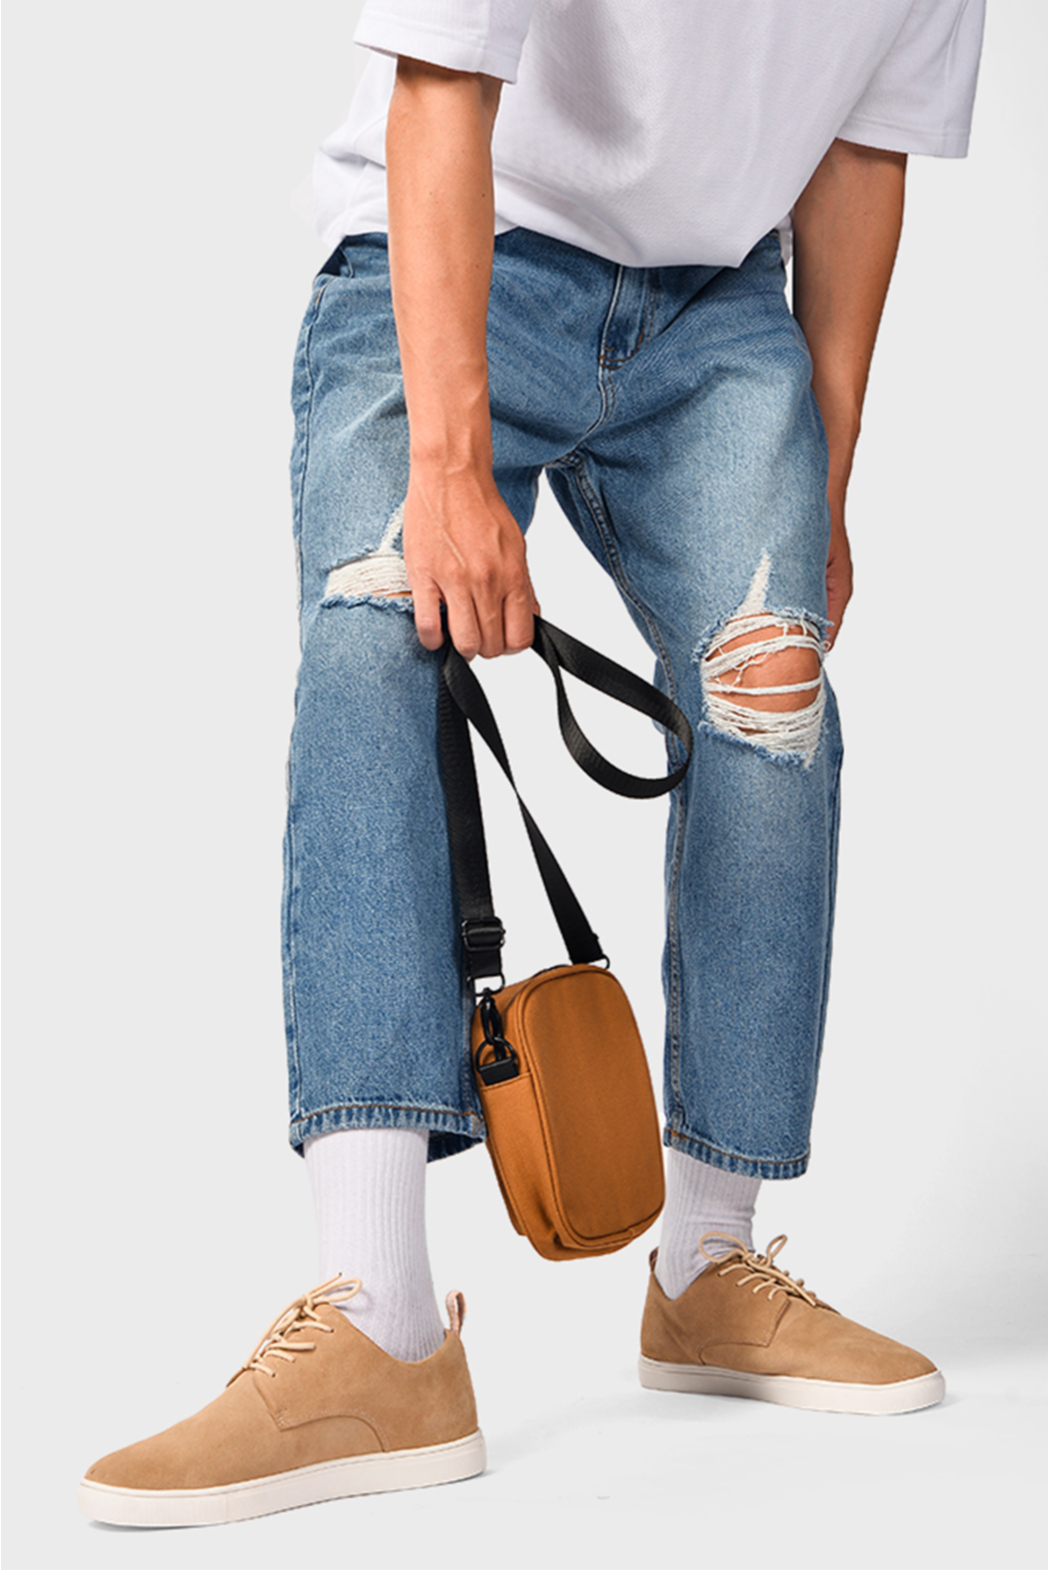 indigo. Quần jeans loose rách gối DNP09-F19 - QJ128003